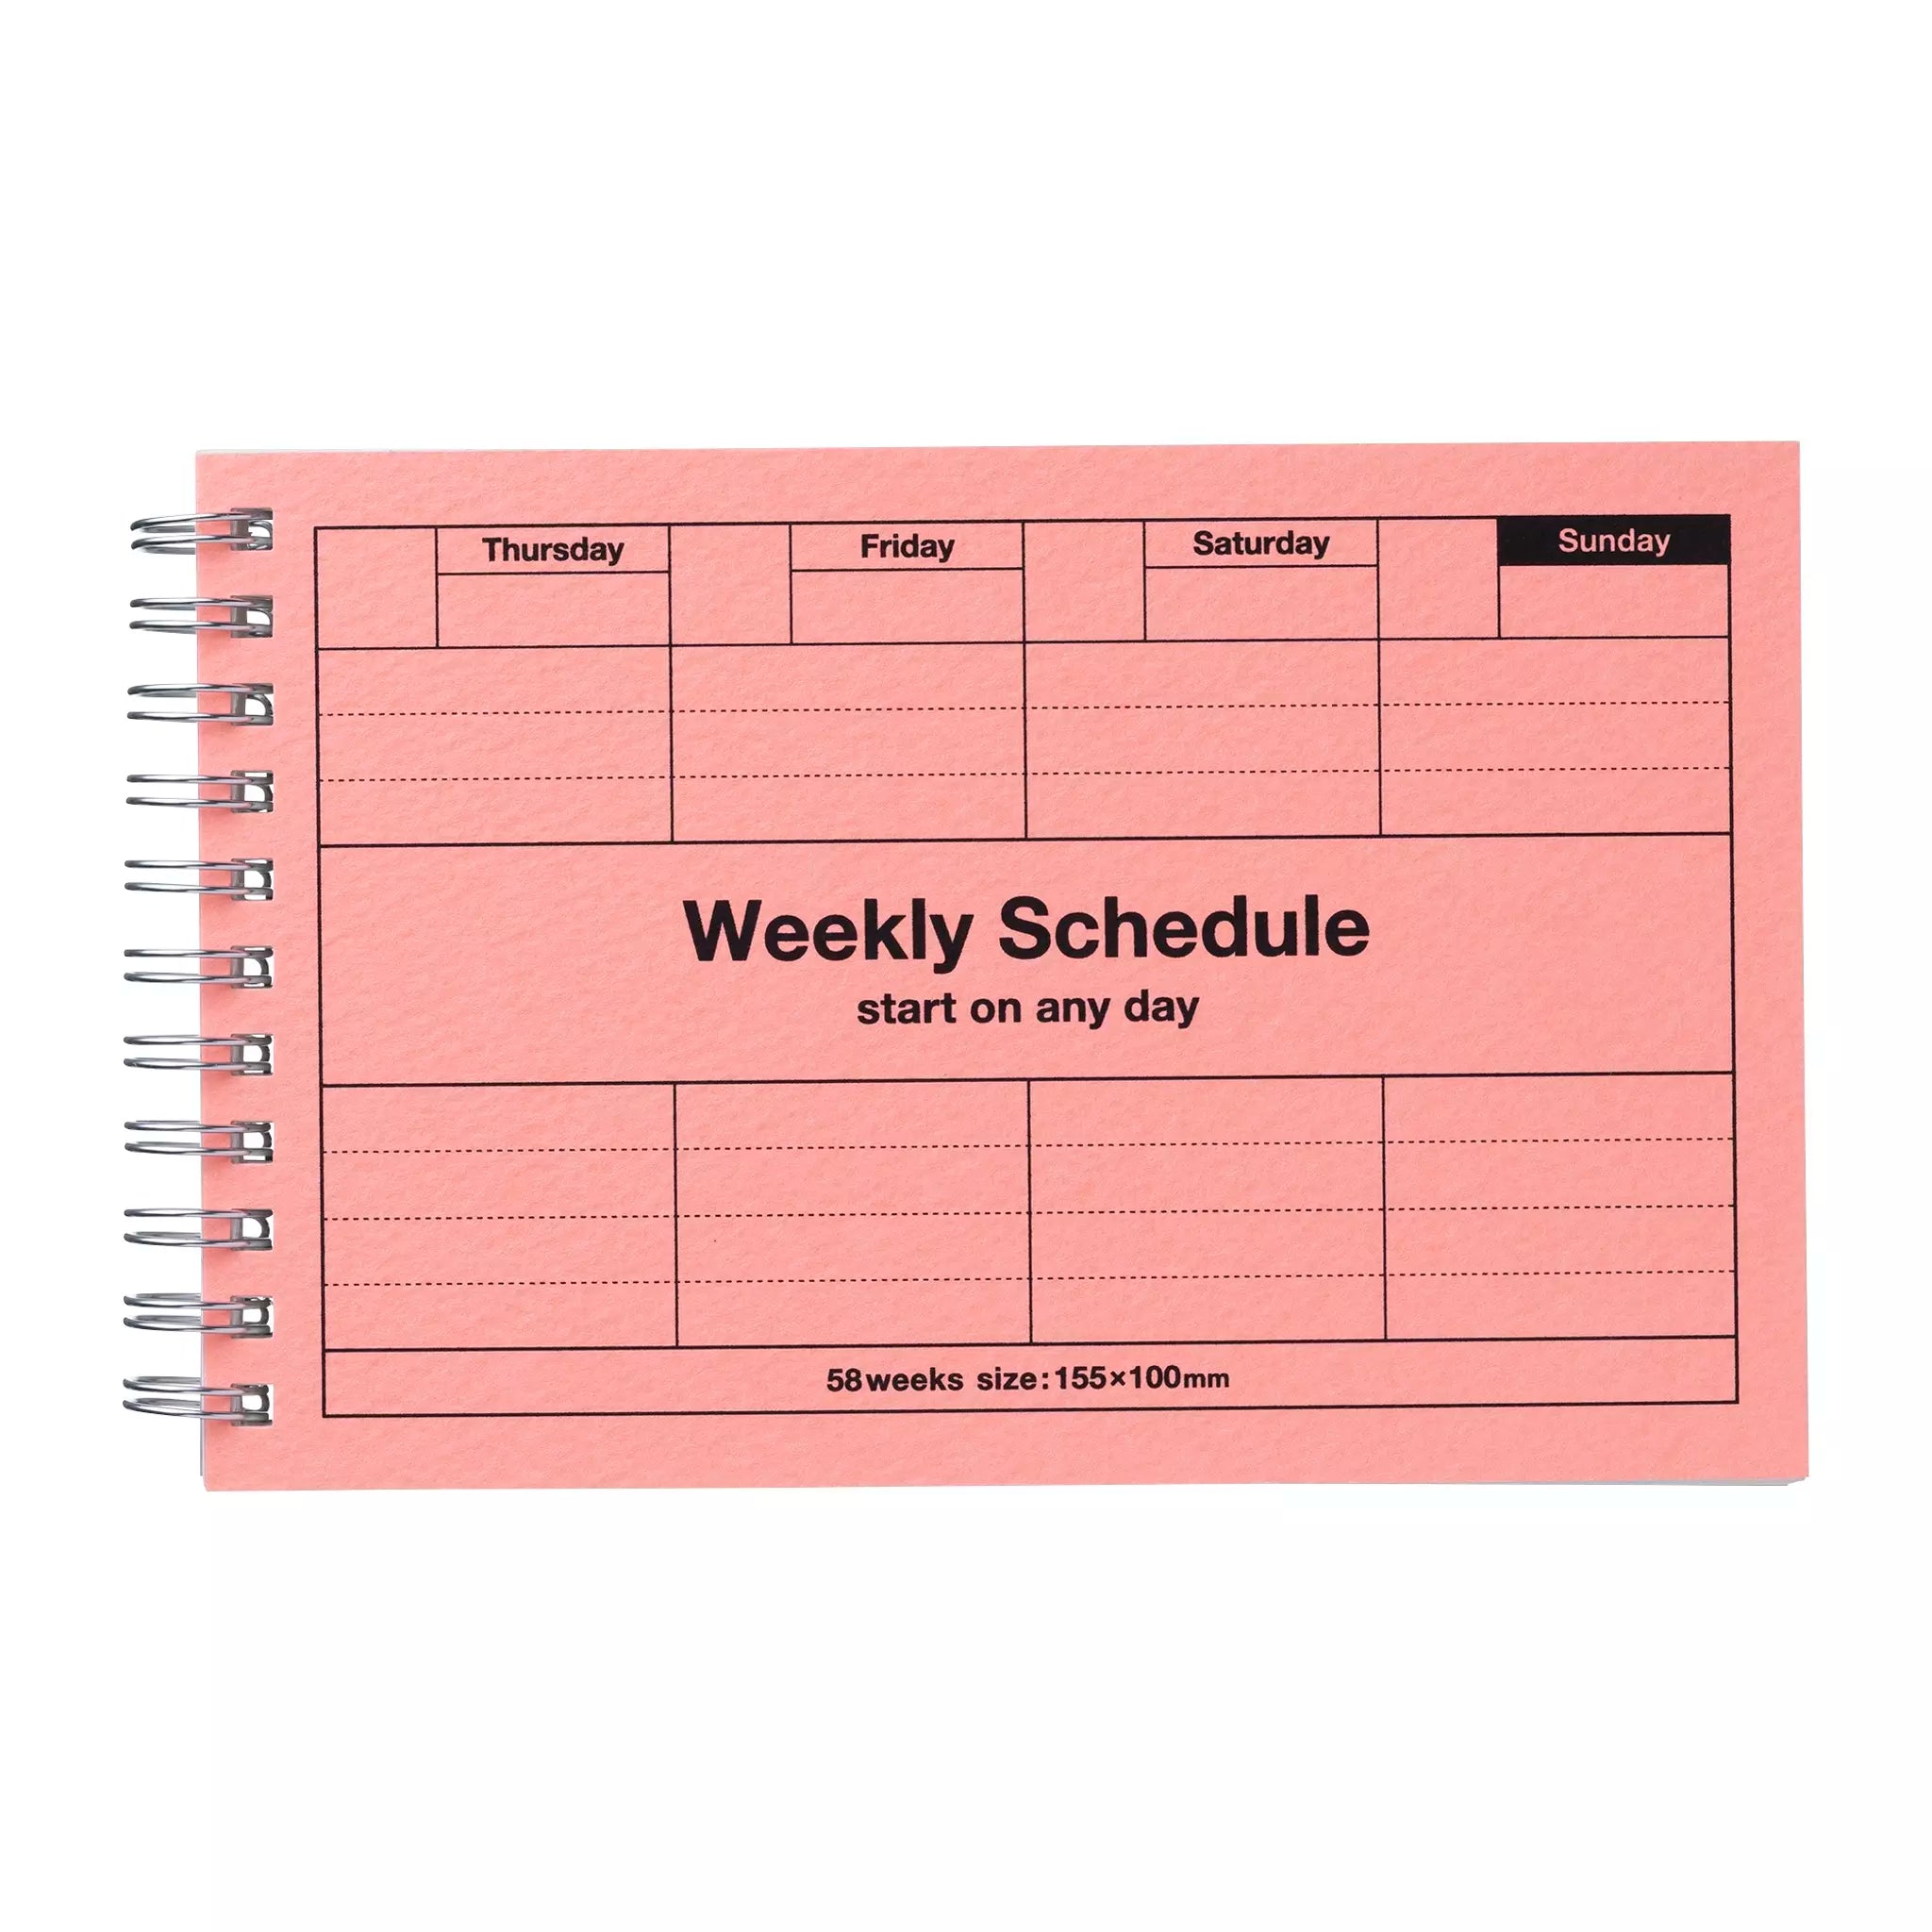 Weekly Schedule - Neon Pink